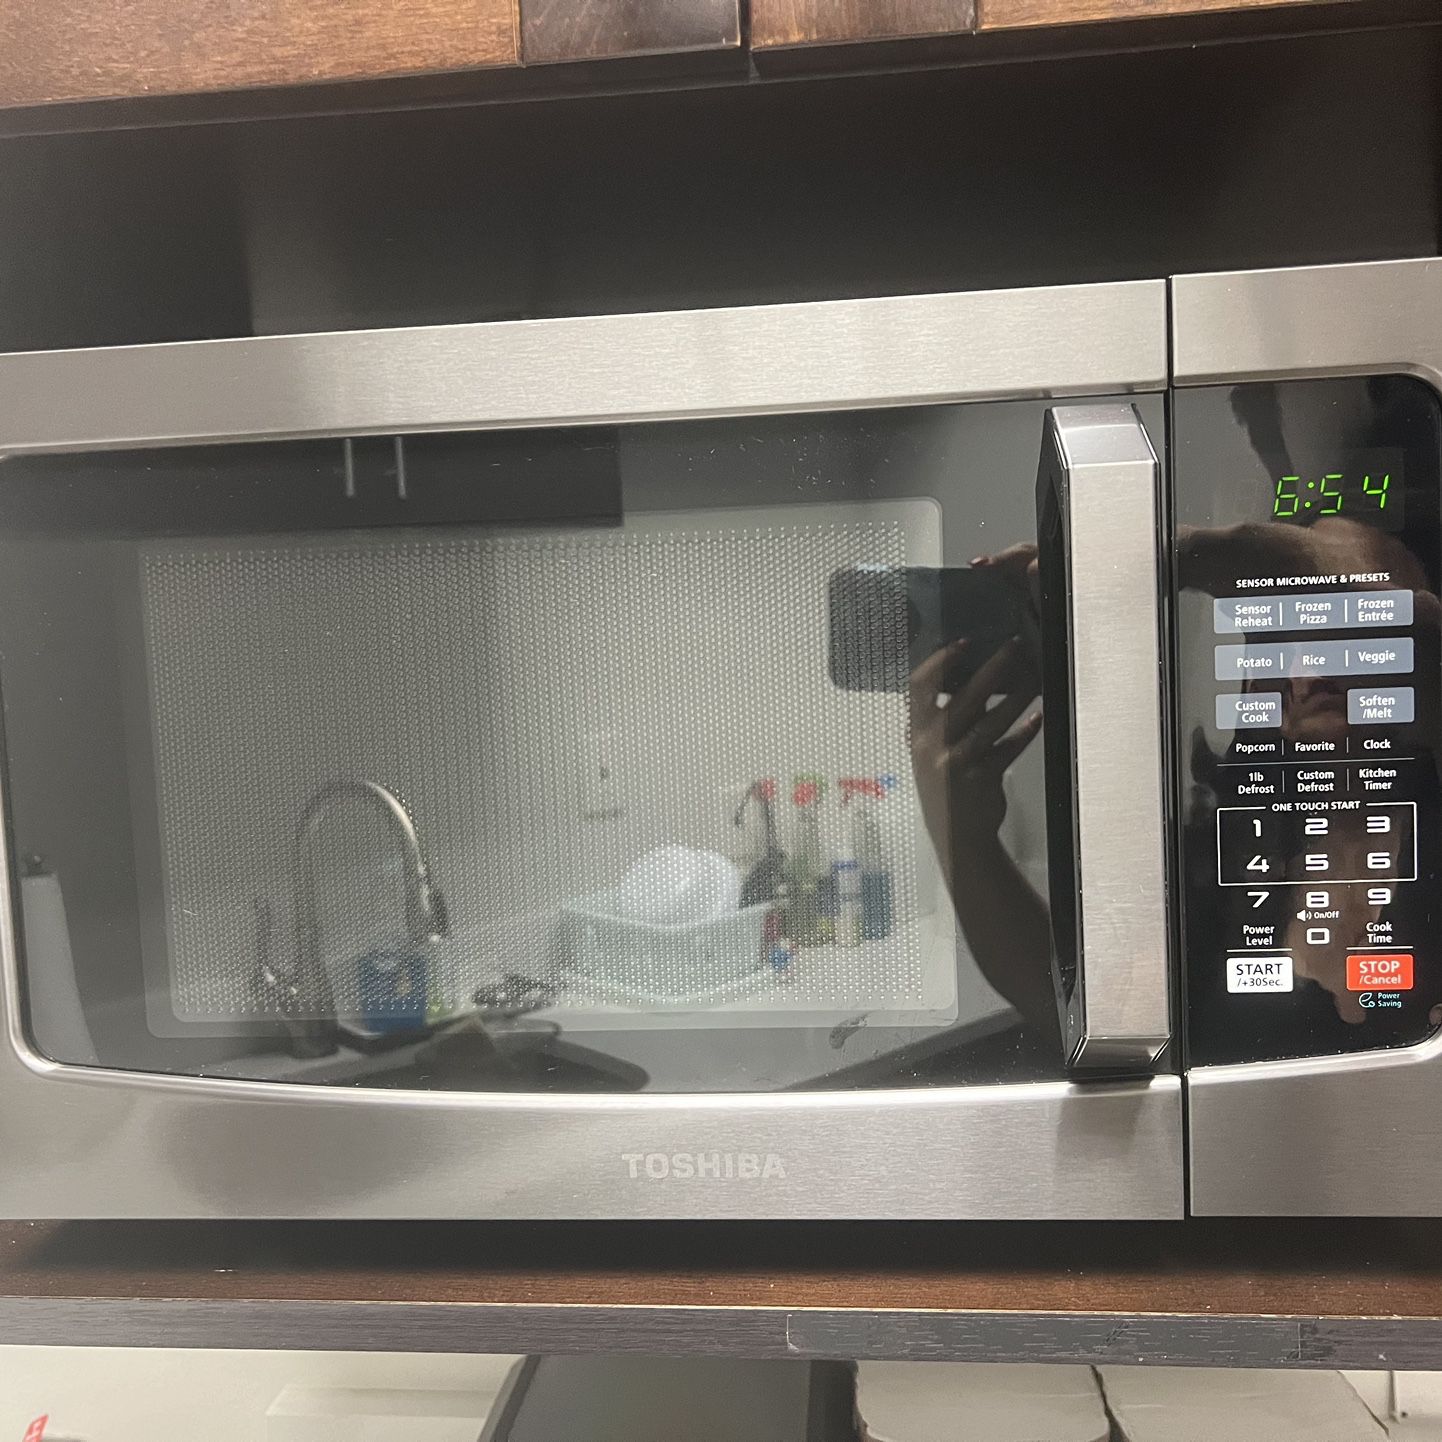 Microwave for Countertop or Shelf - Toshiba